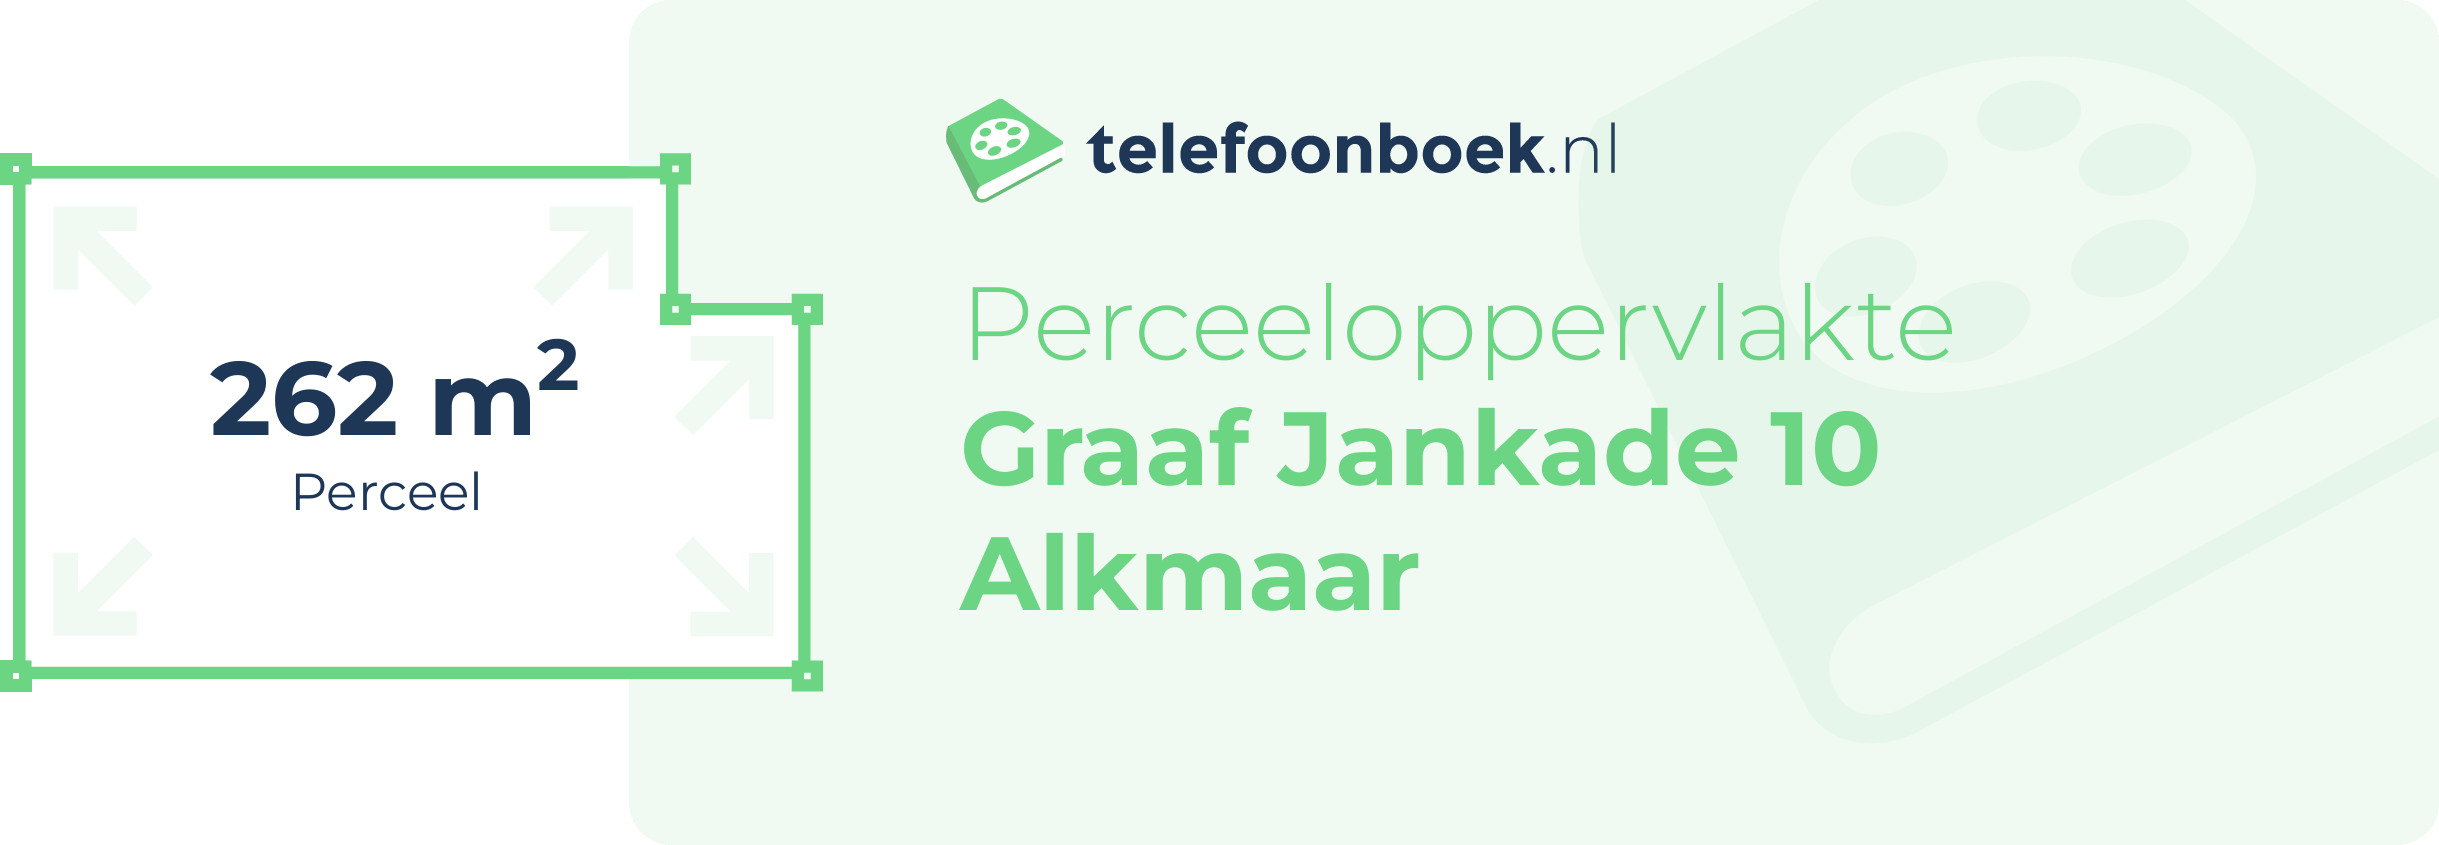 Perceeloppervlakte Graaf Jankade 10 Alkmaar